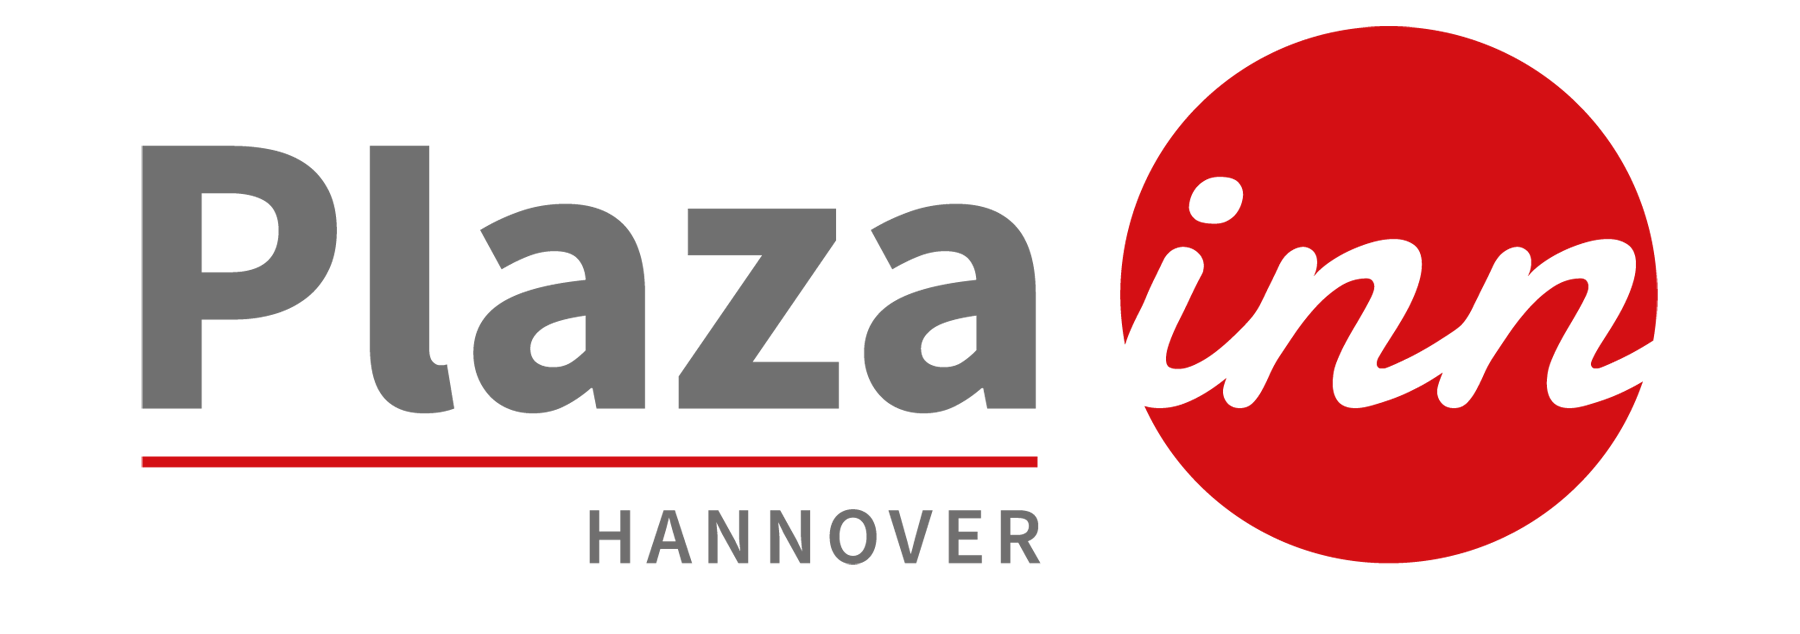 Hotel Plaza Inn in Hannover, Logo